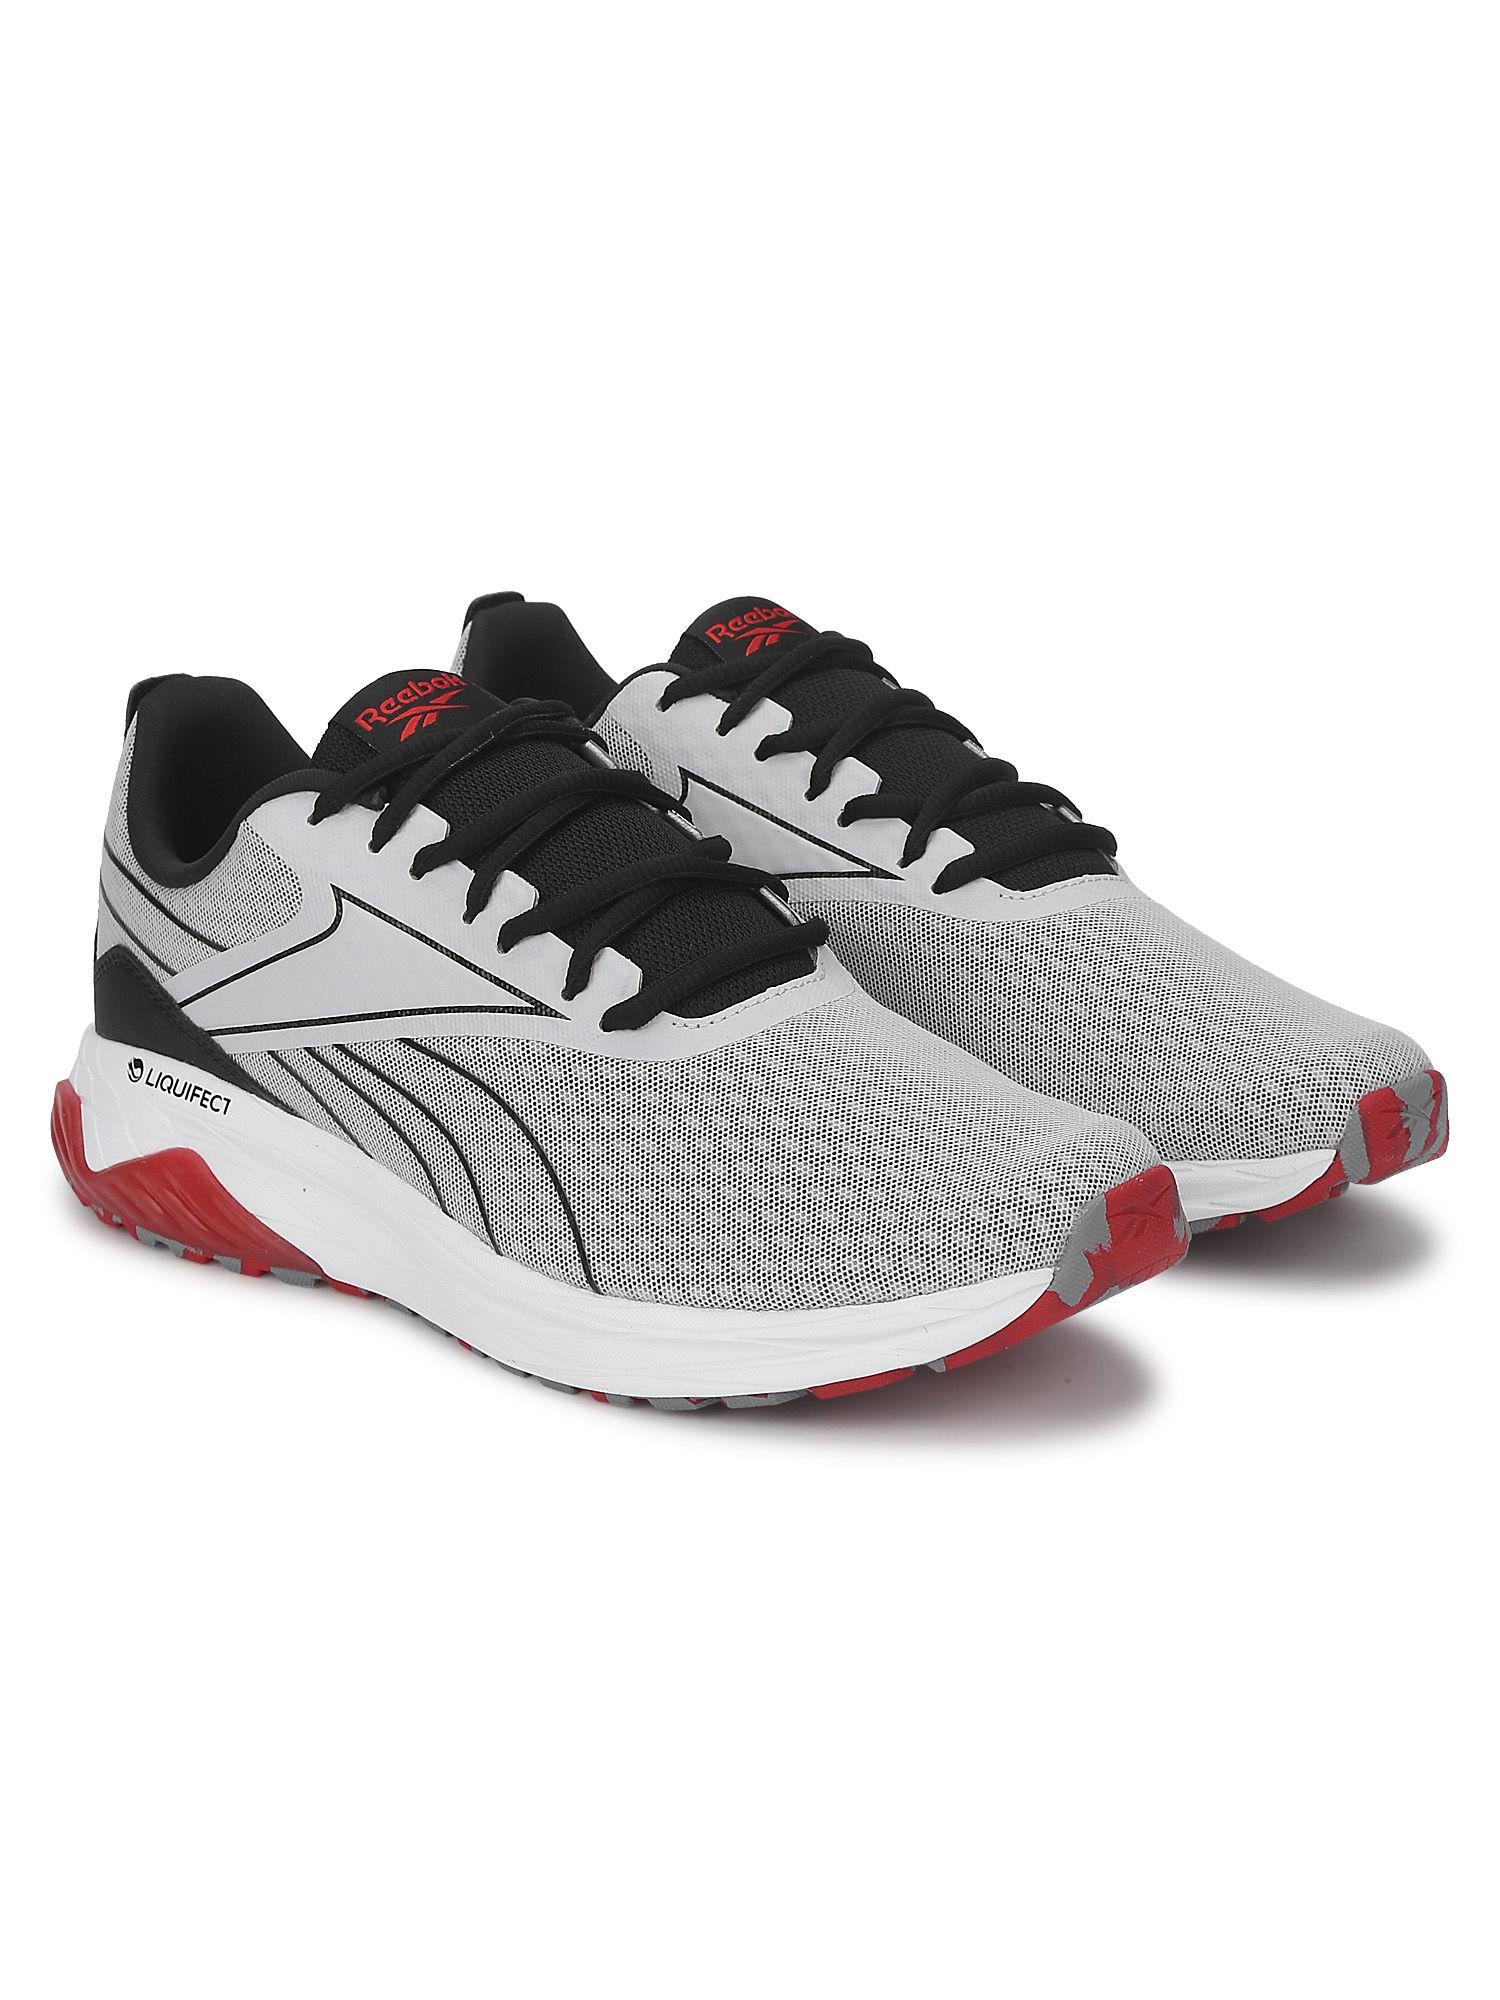 liquifect-180-2.0-grey-running-shoes